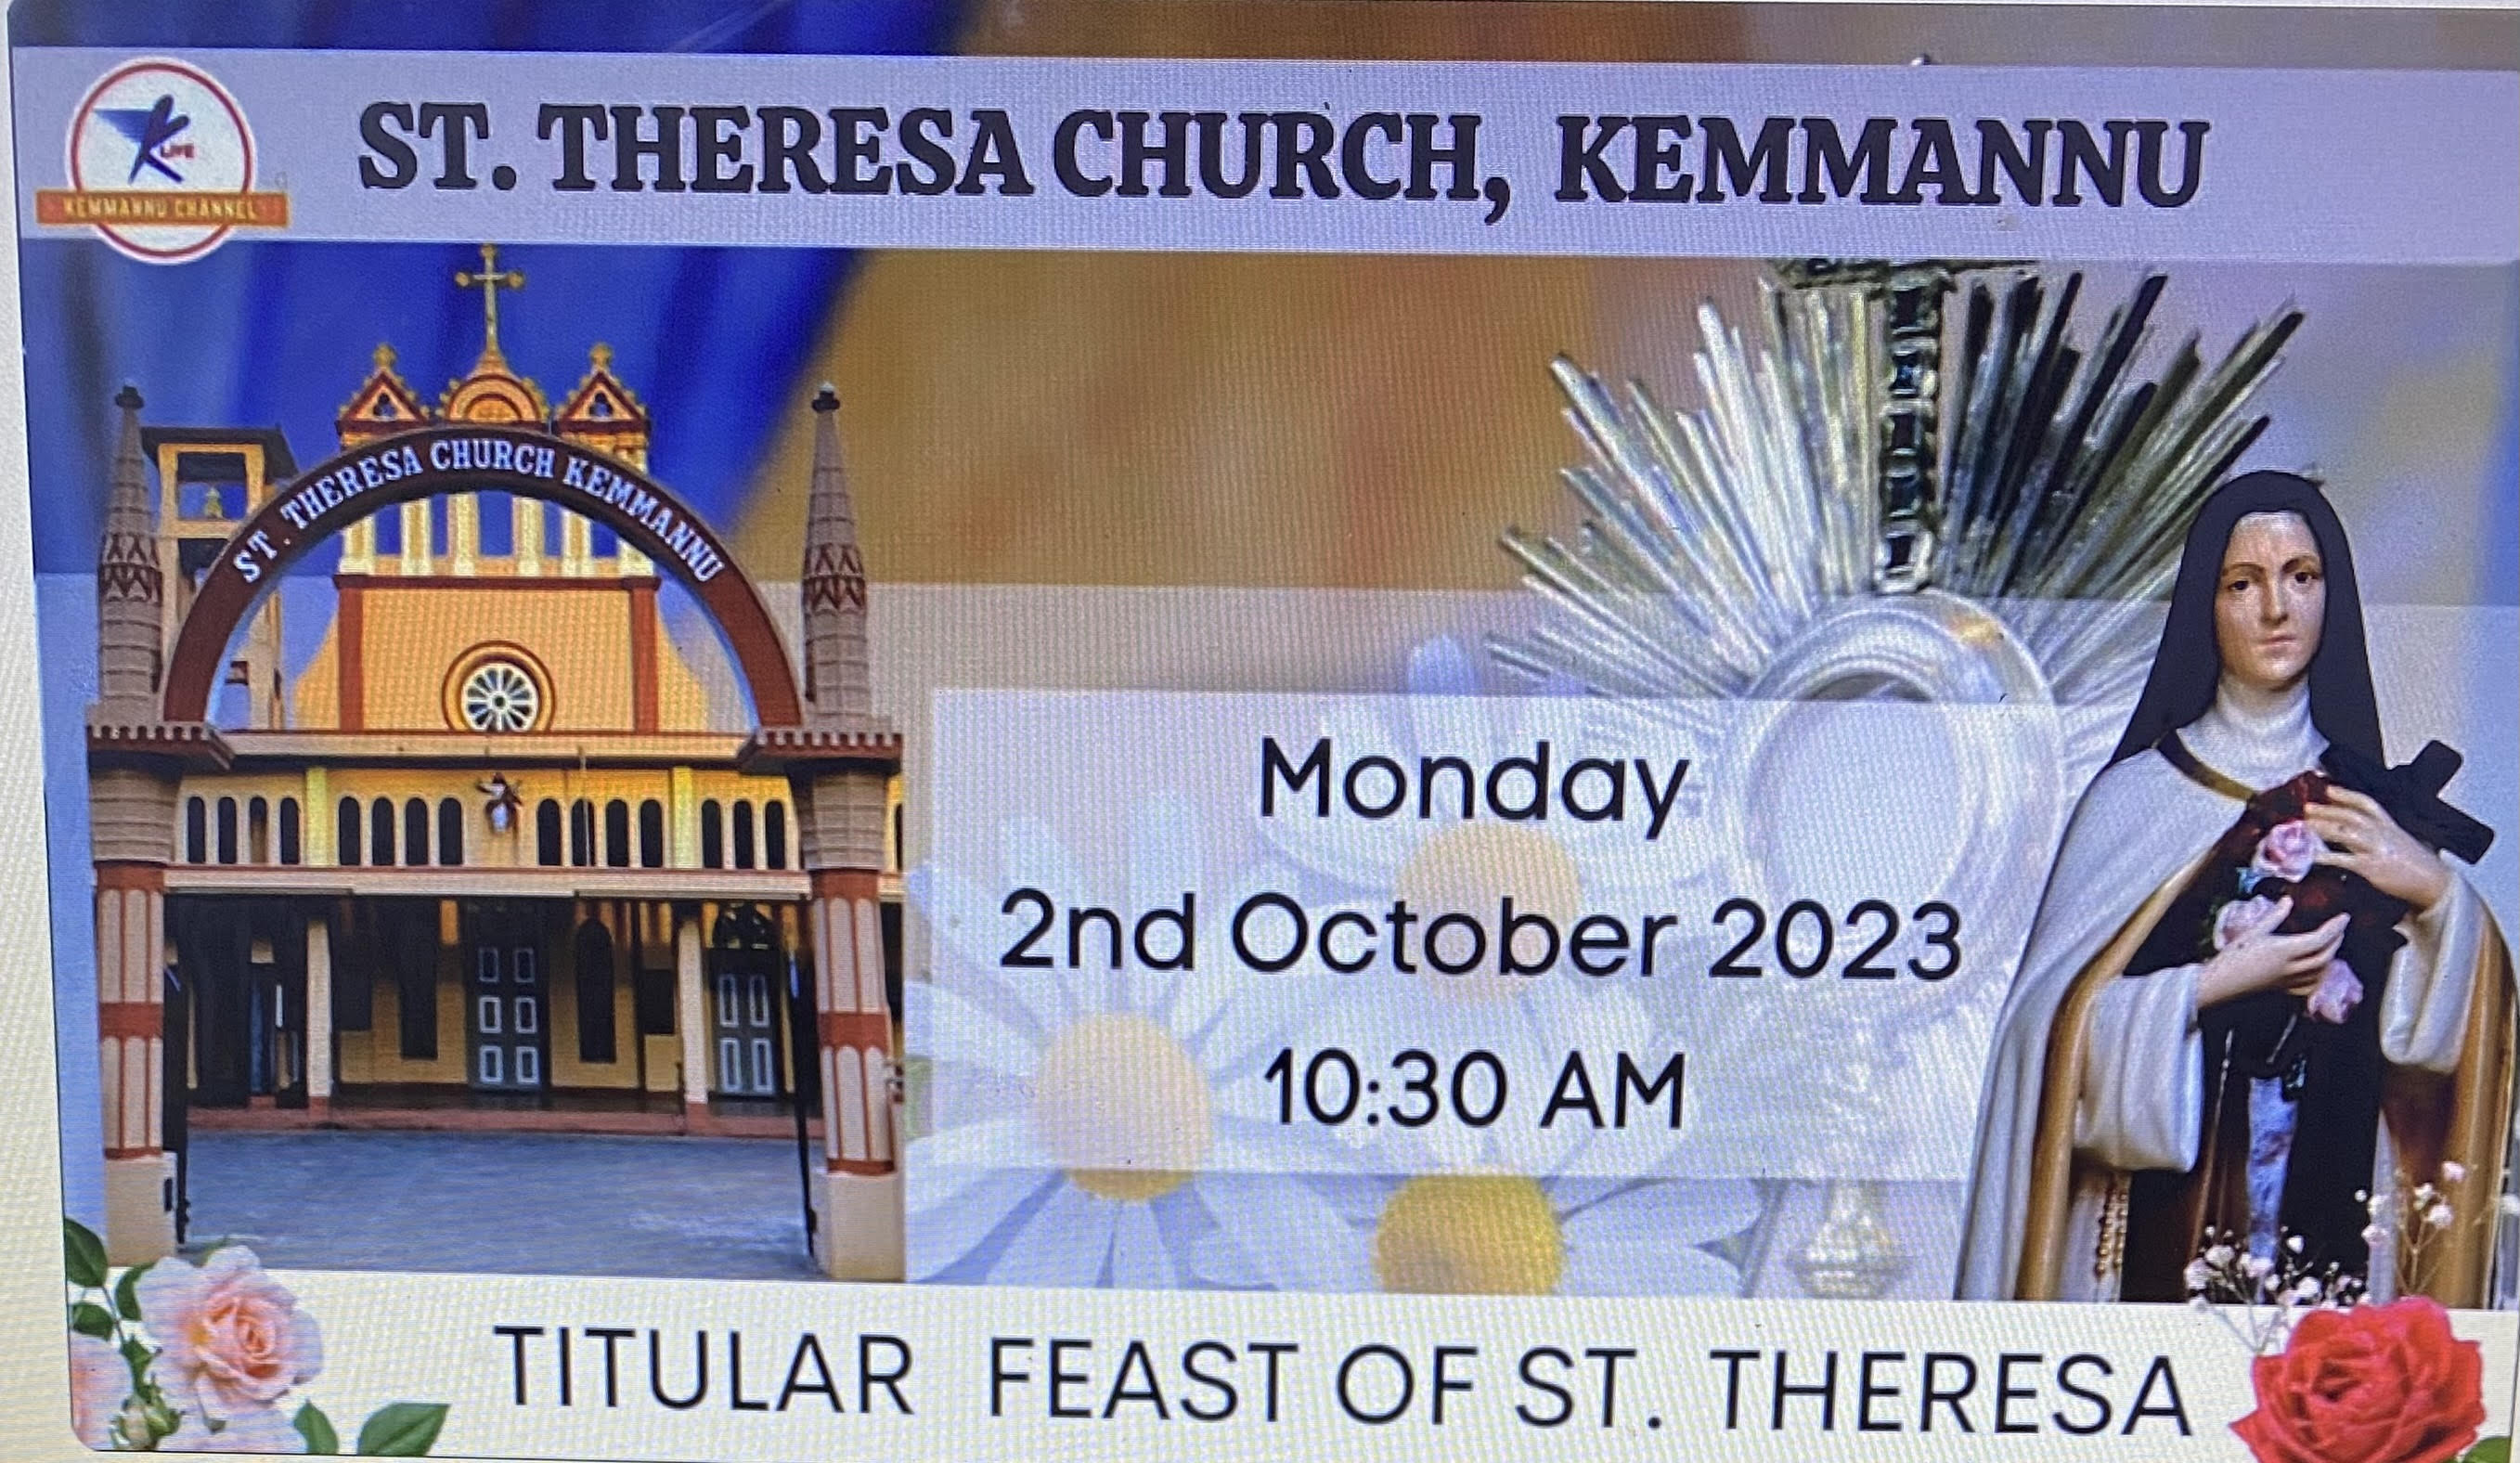 Titular Feast of St. Theresa | St. Theresa Church, Kemmannu